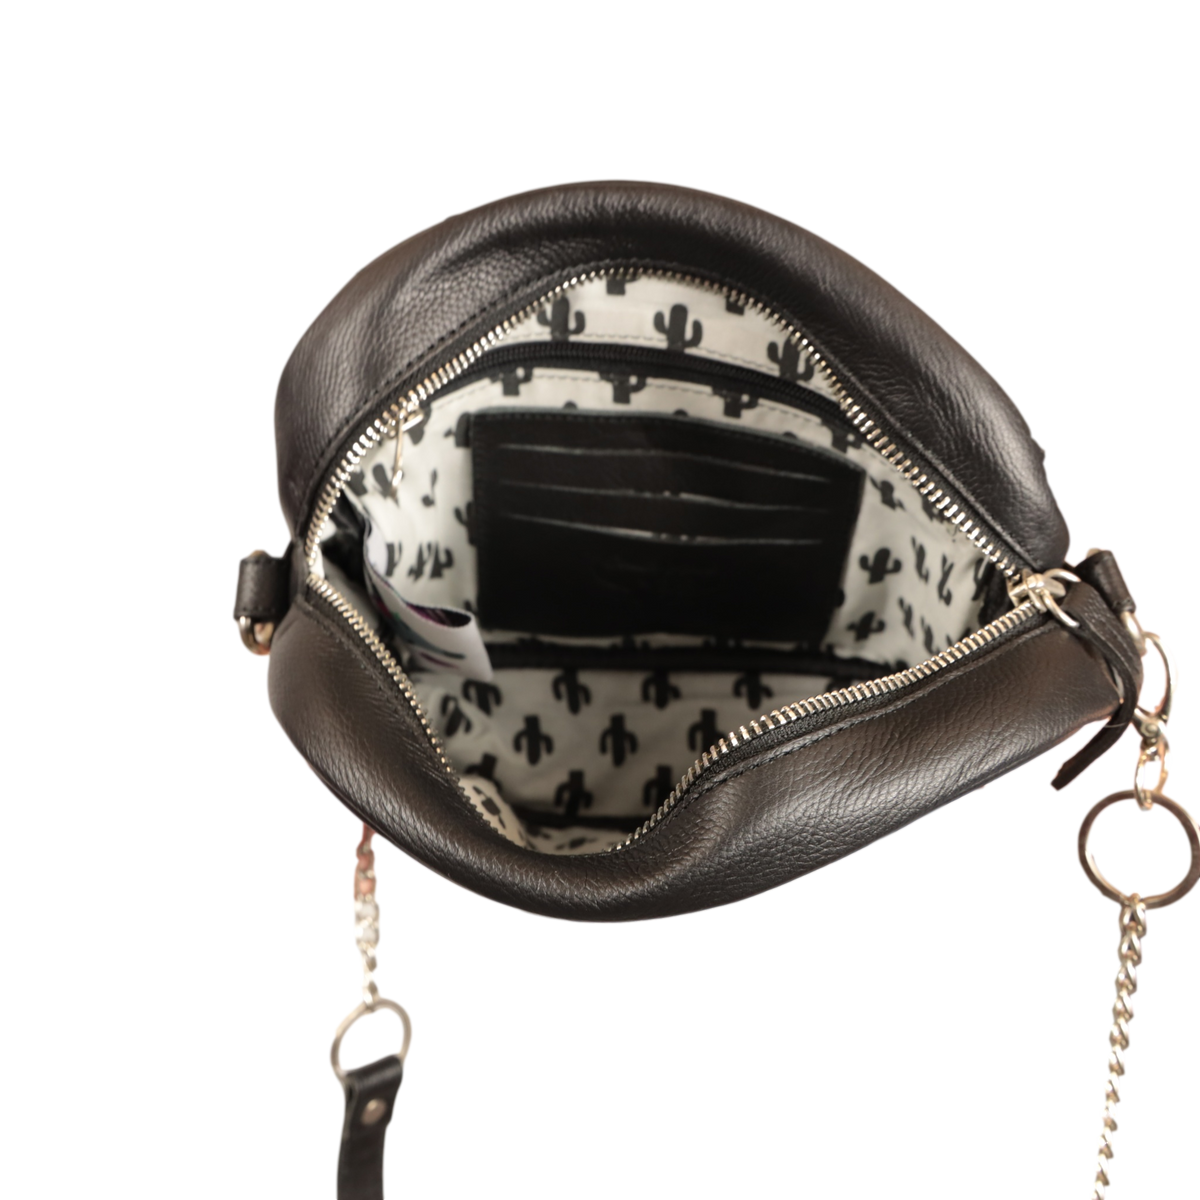 Stella Cowhide Leather Handbag - 043